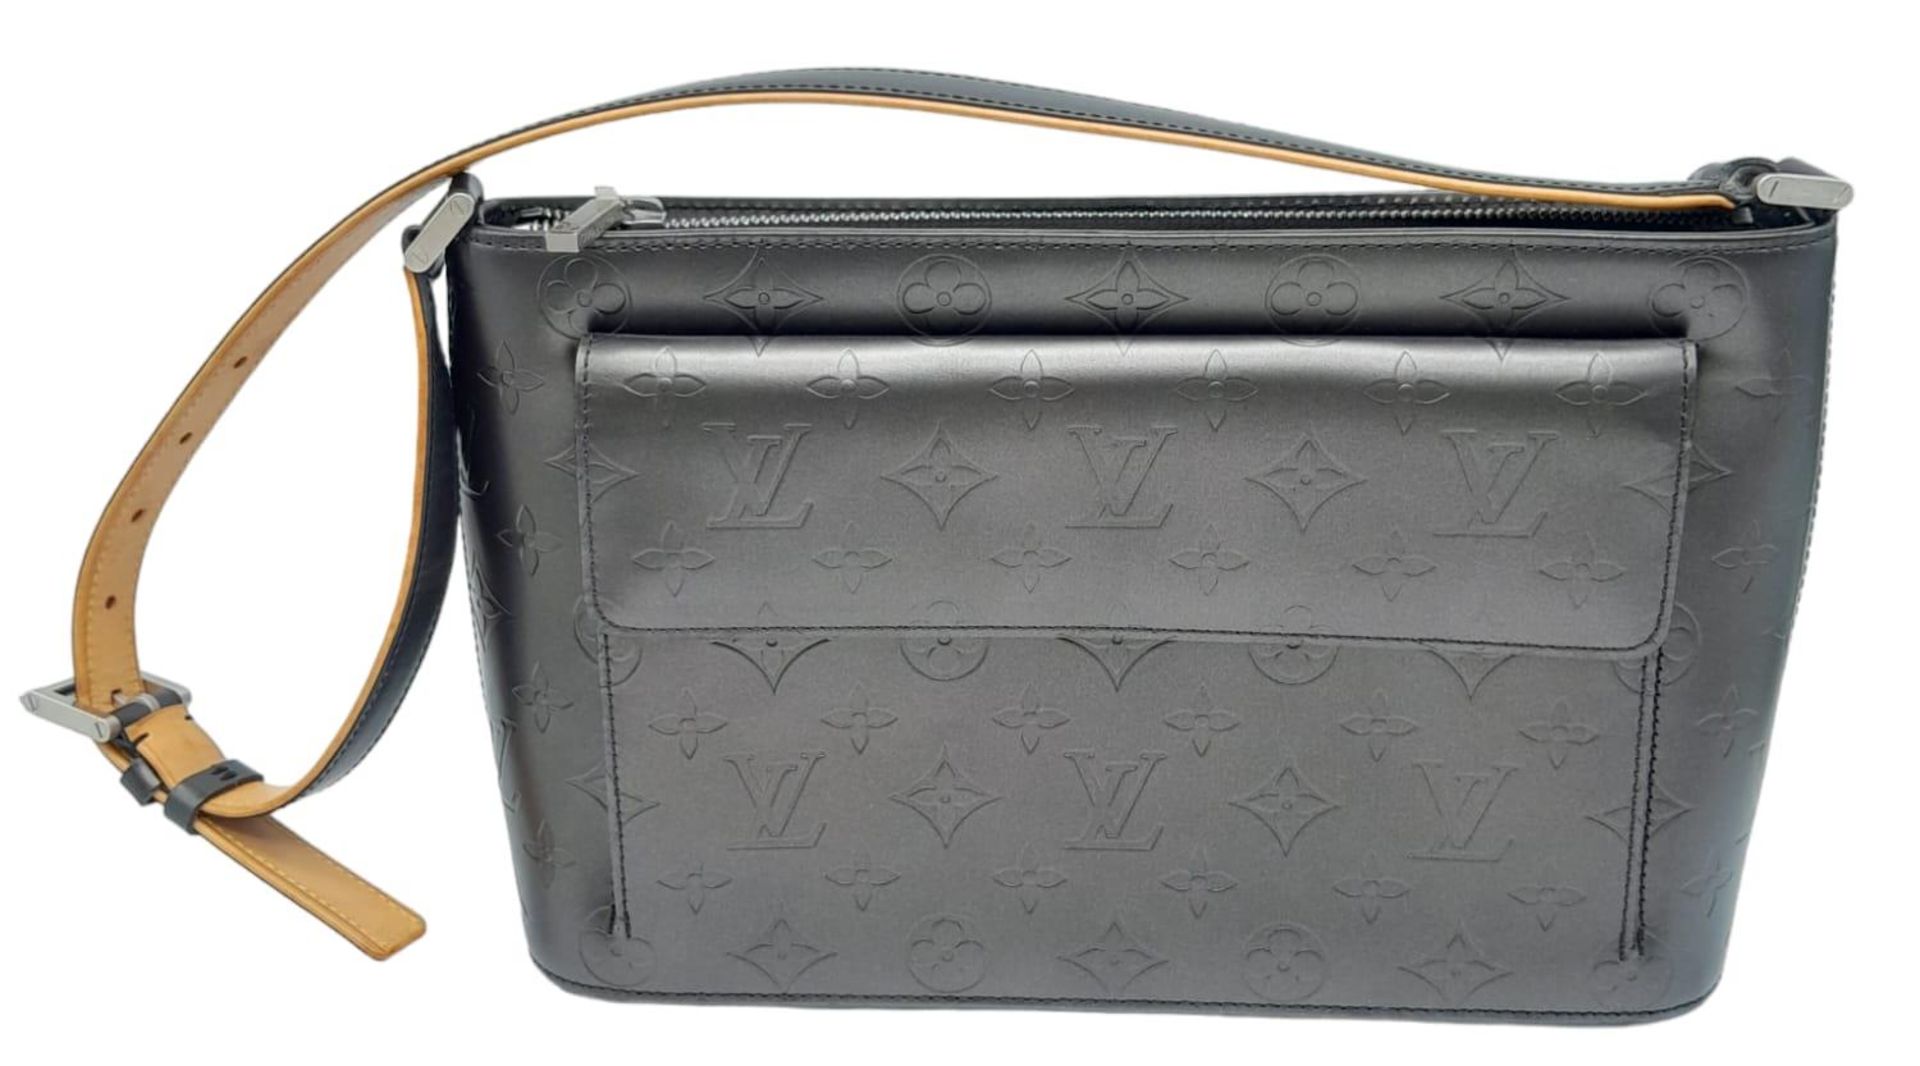 Louis Vuitton Black Leather Handbag. LV monogrammed, silver tone hardware and adjustable 2-toned